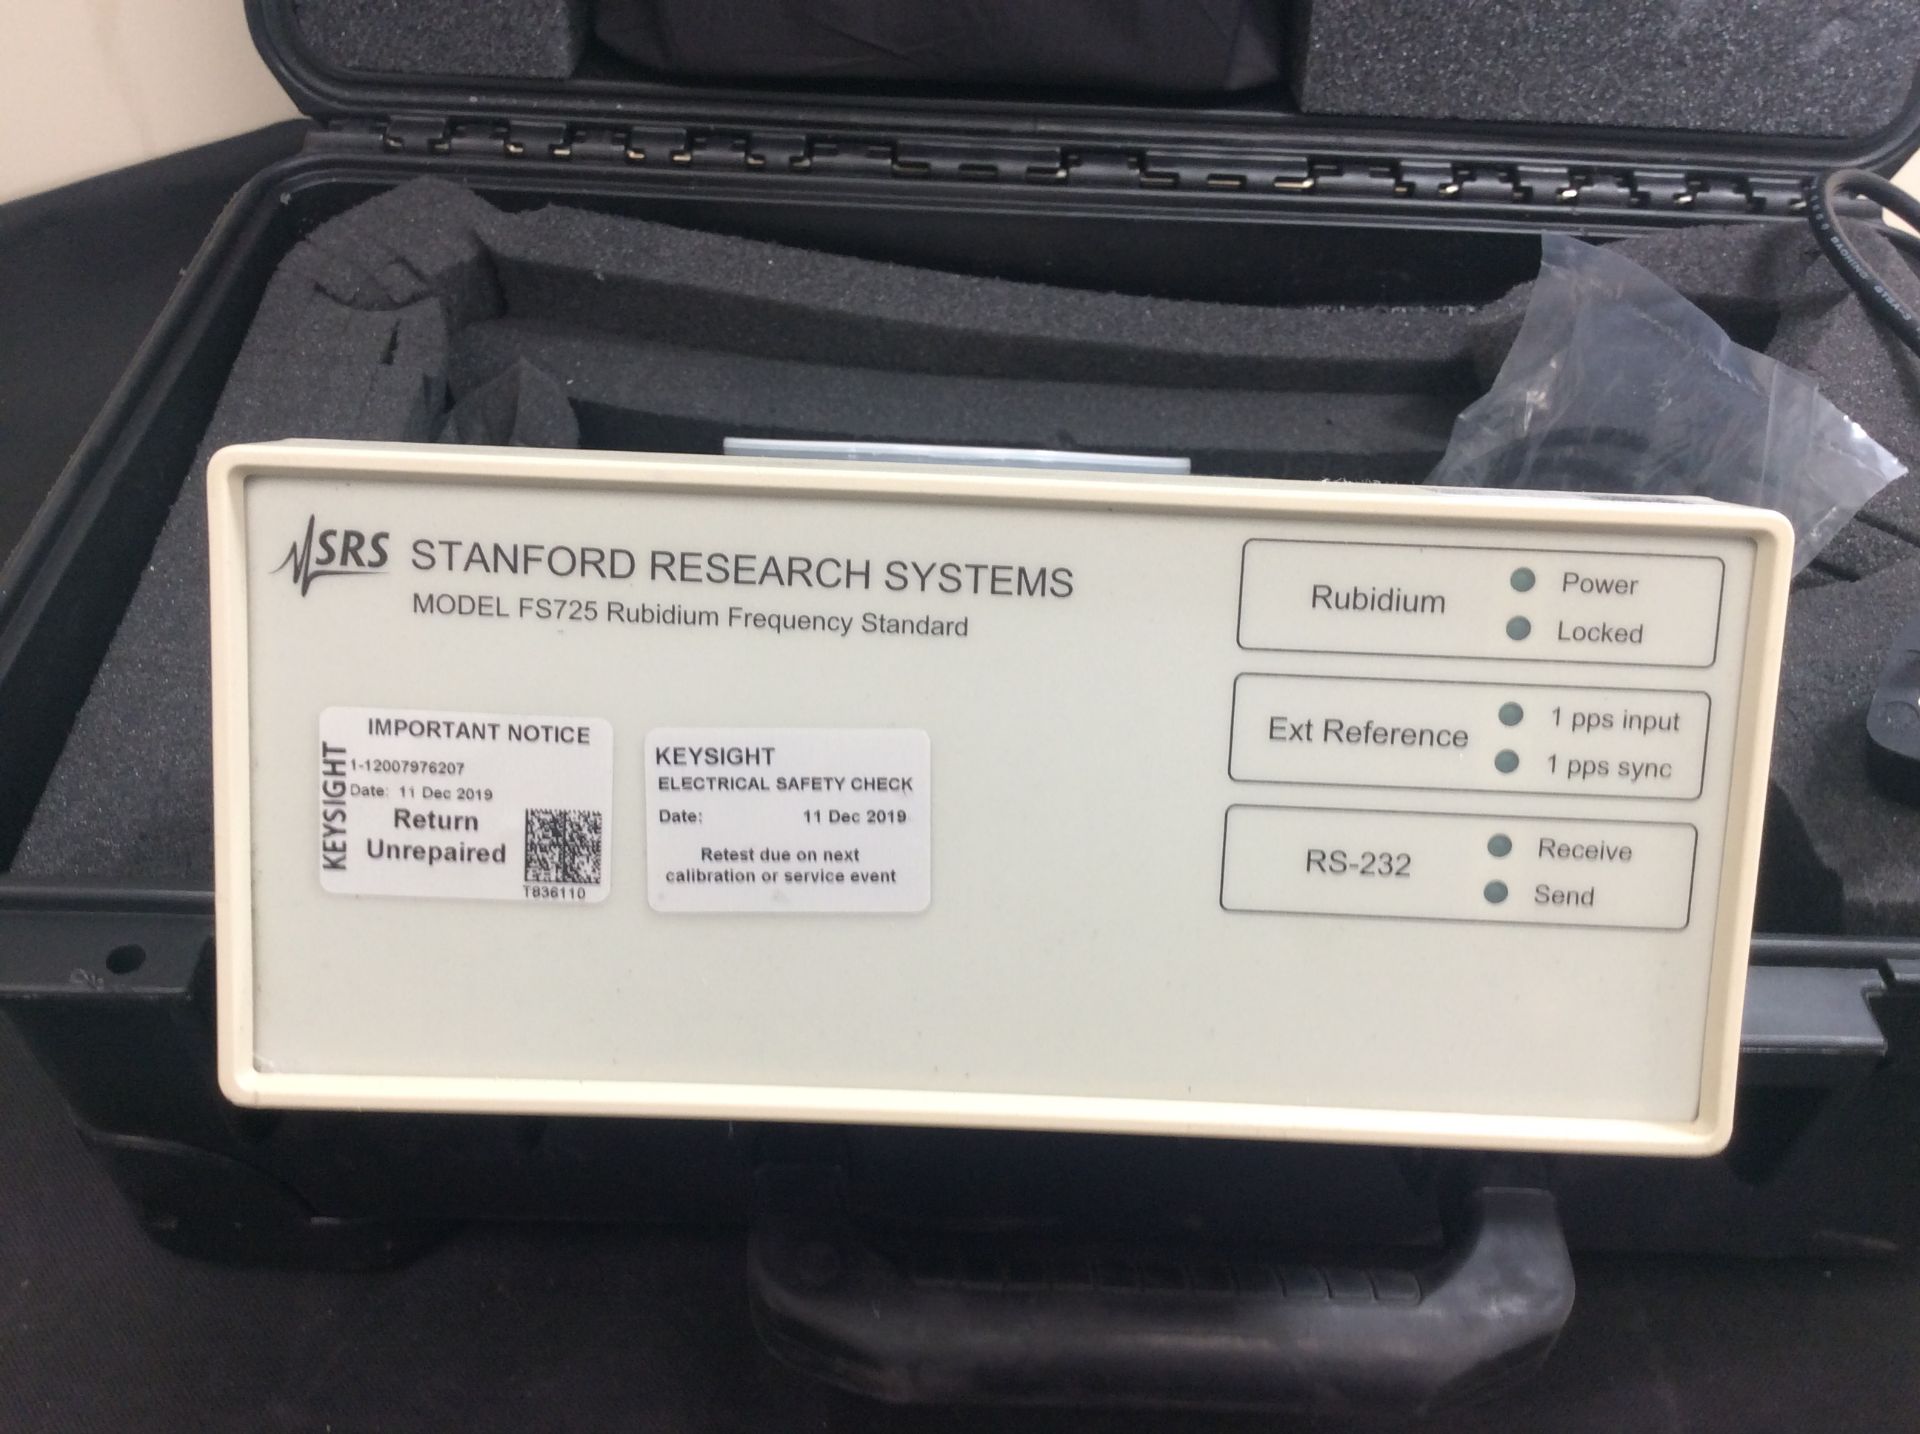 Srs rubidium frequency standard model fs725 in travel case - Image 2 of 2